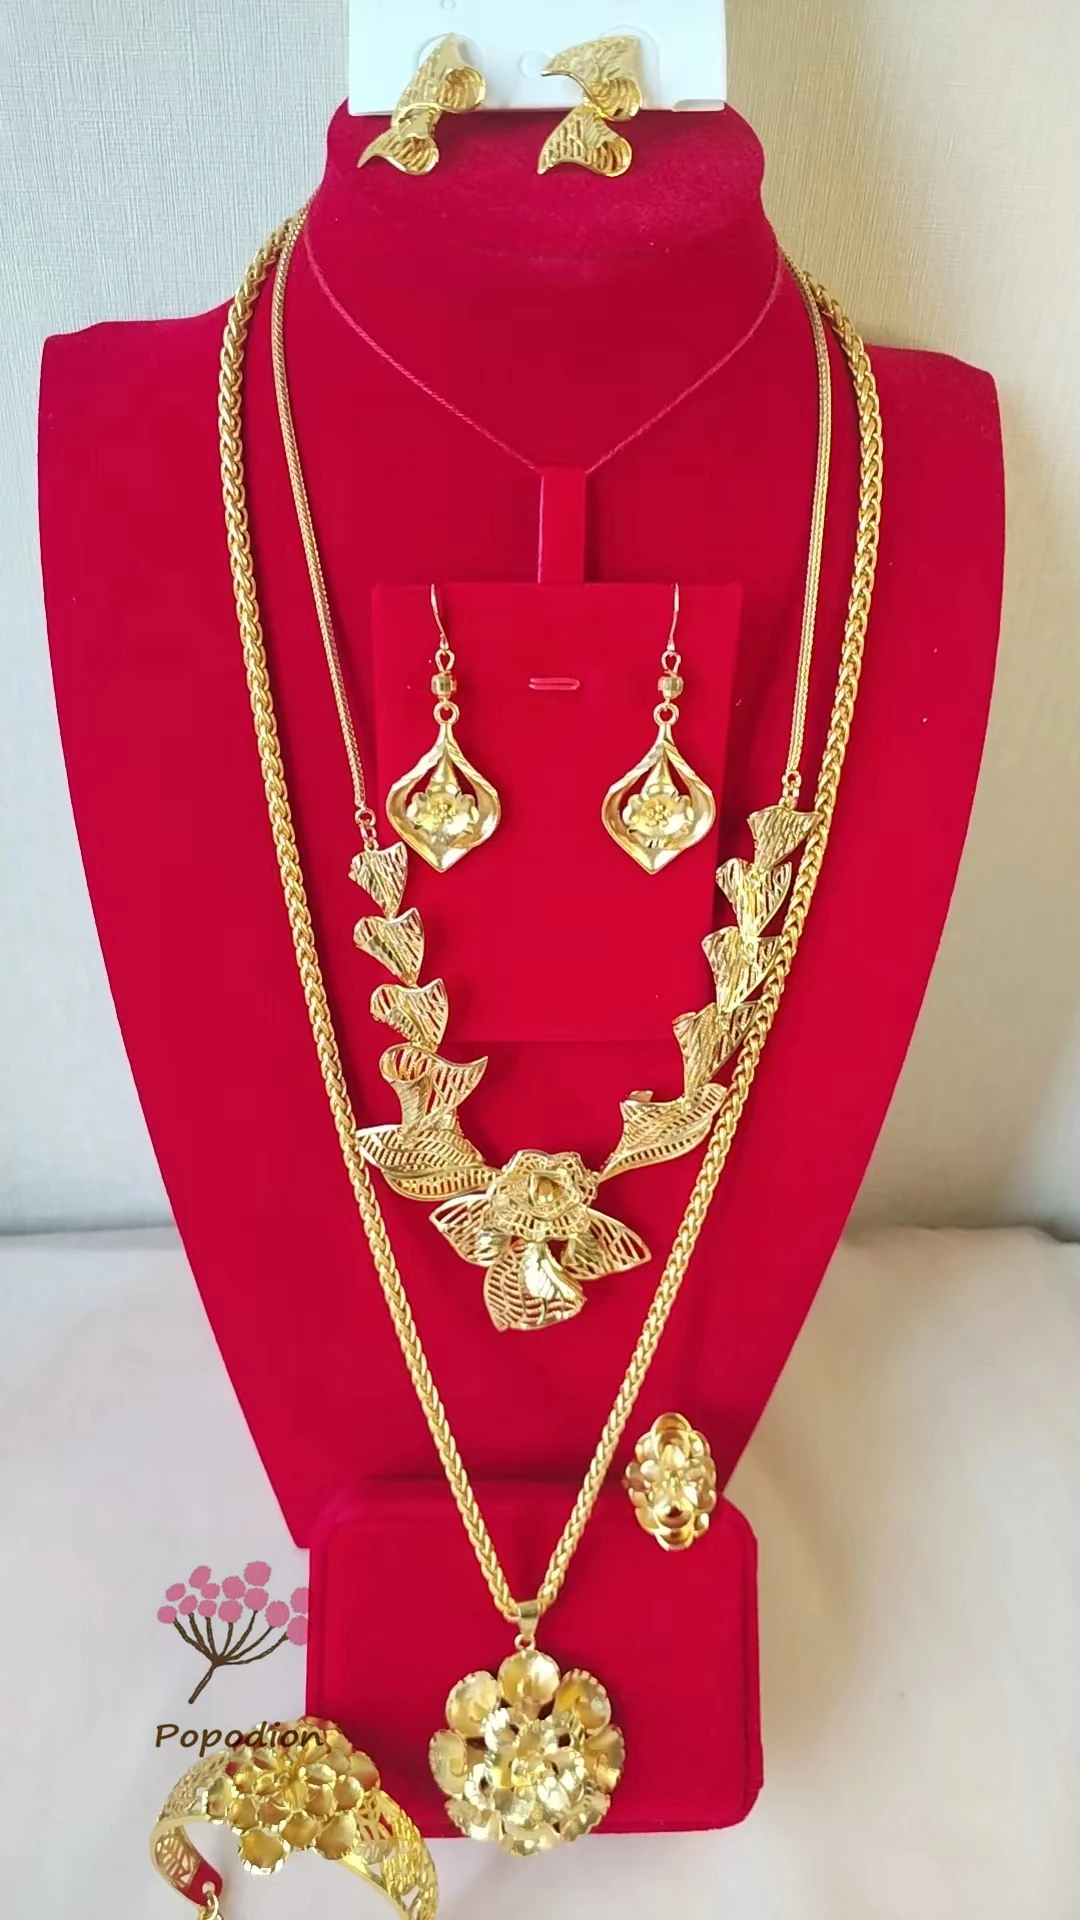 

New 24K Gold Plated Dubai Popodion Jewelry Set Necklace Earrings Bracelet Ring Bridal Wedding Jewelry Six Piece Set YY10398